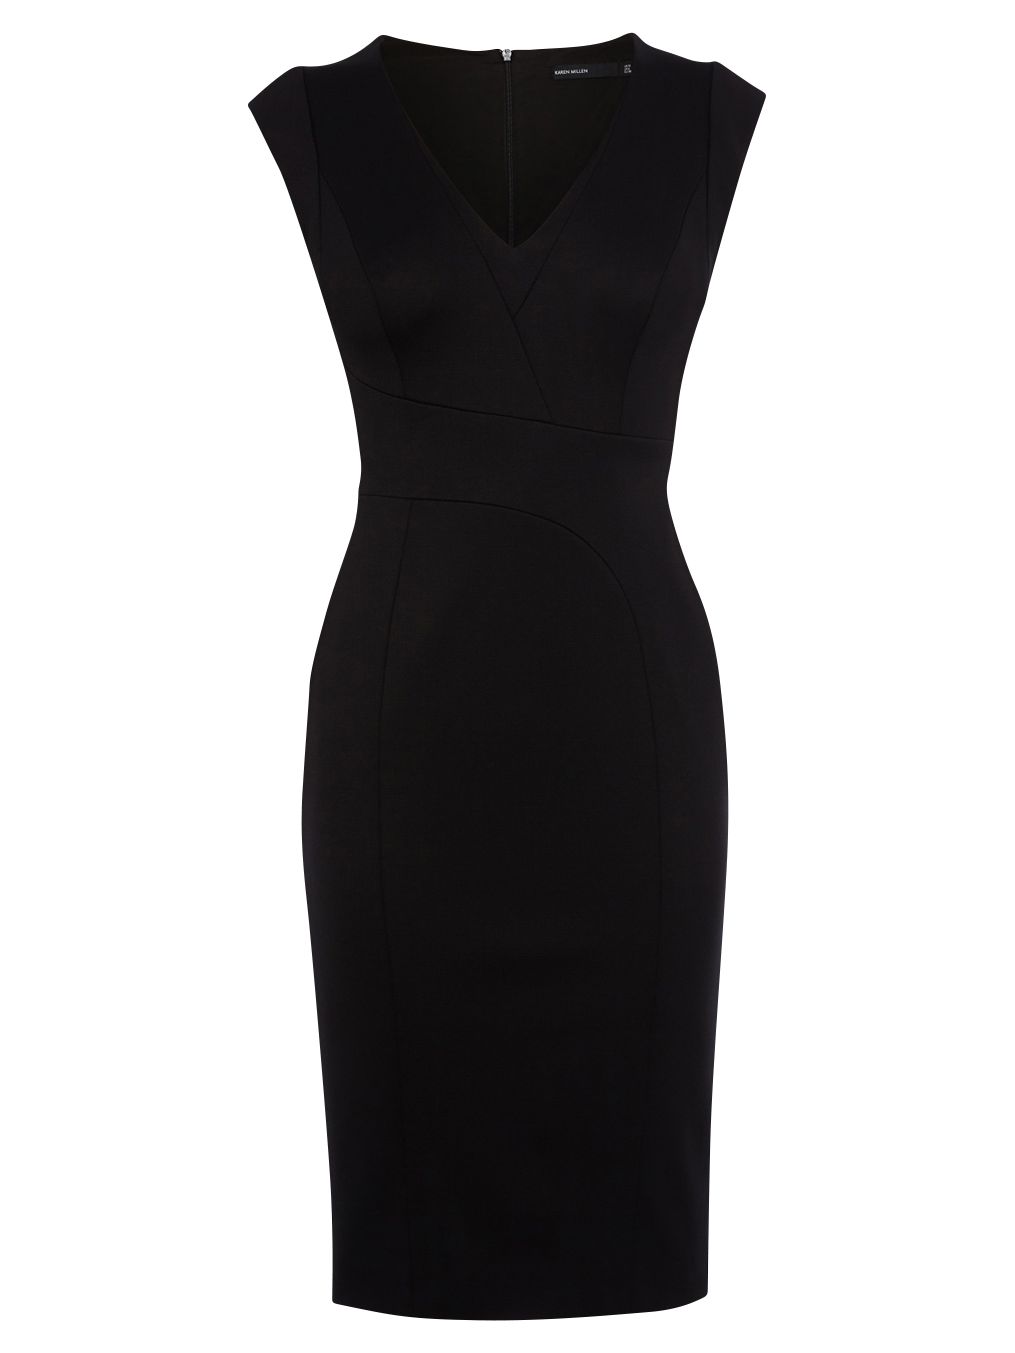 Karen Millen Structured Pencil Dress, Black at John Lewis & Partners